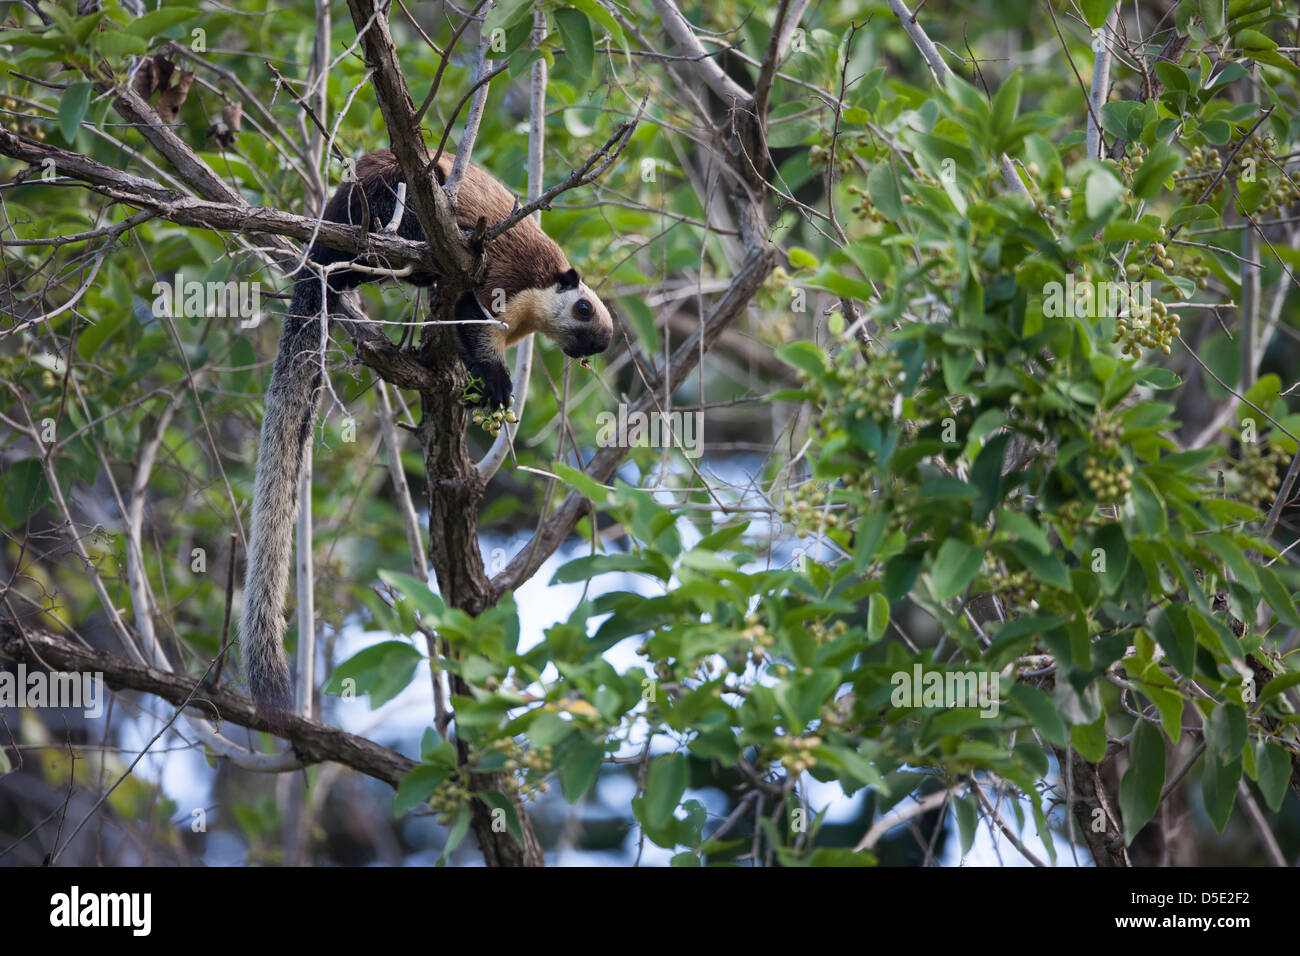 Black Giant Squirrel (or Malayan Giant Squirrel) (Ratufa bicolor) in a tree in Bali, Indonesia. Stock Photo